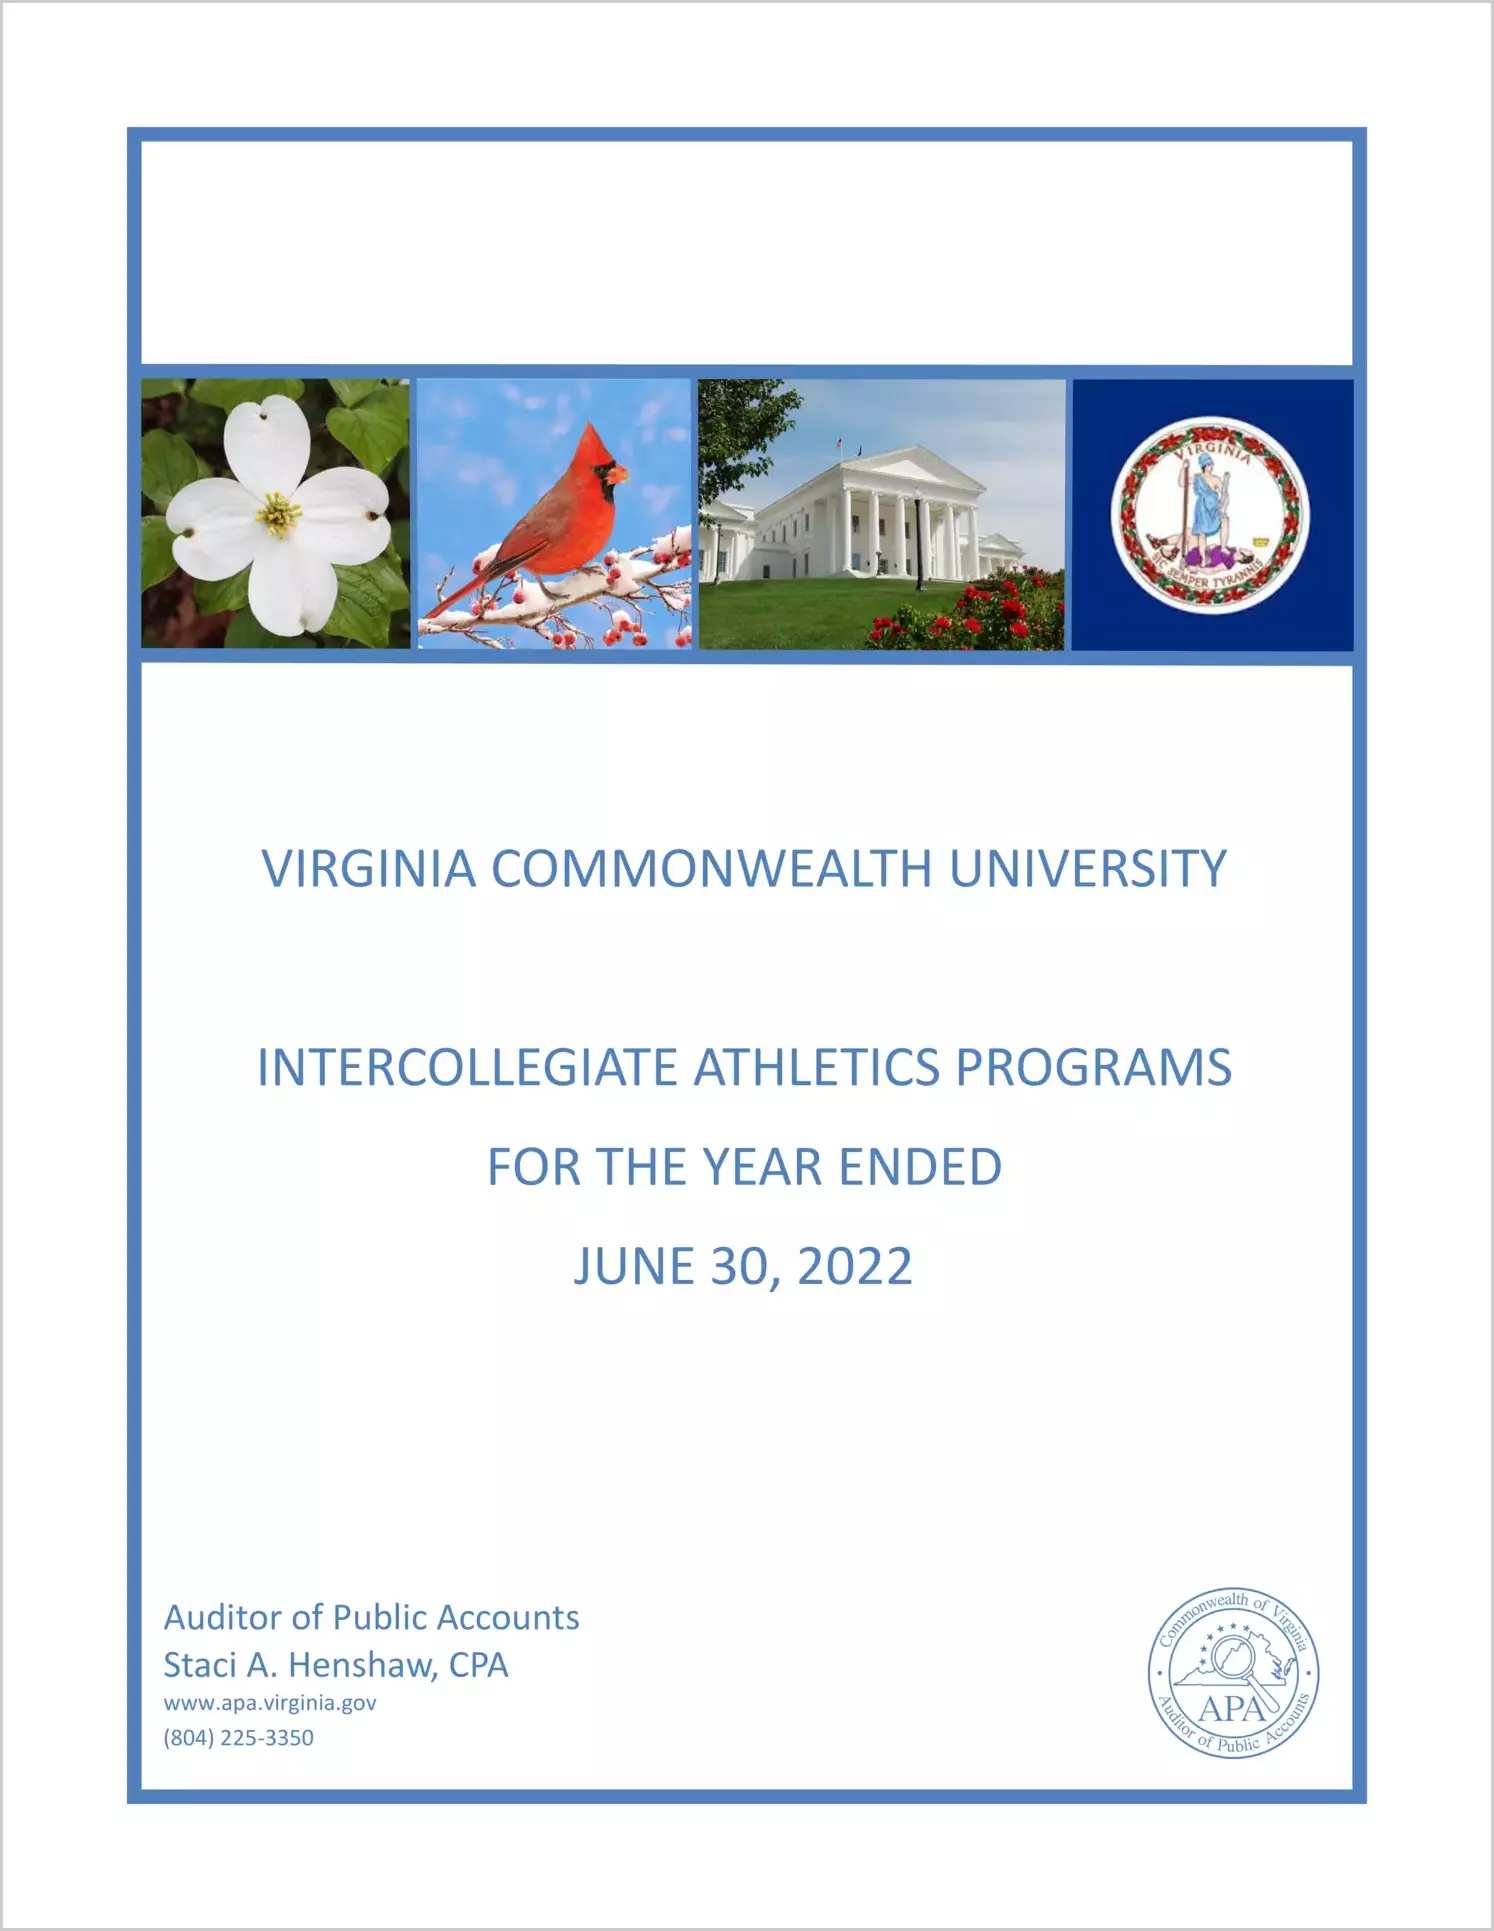 Virginia Commonwealth University Intercollegiate Athletics Programs for the year ended June 30, 2022